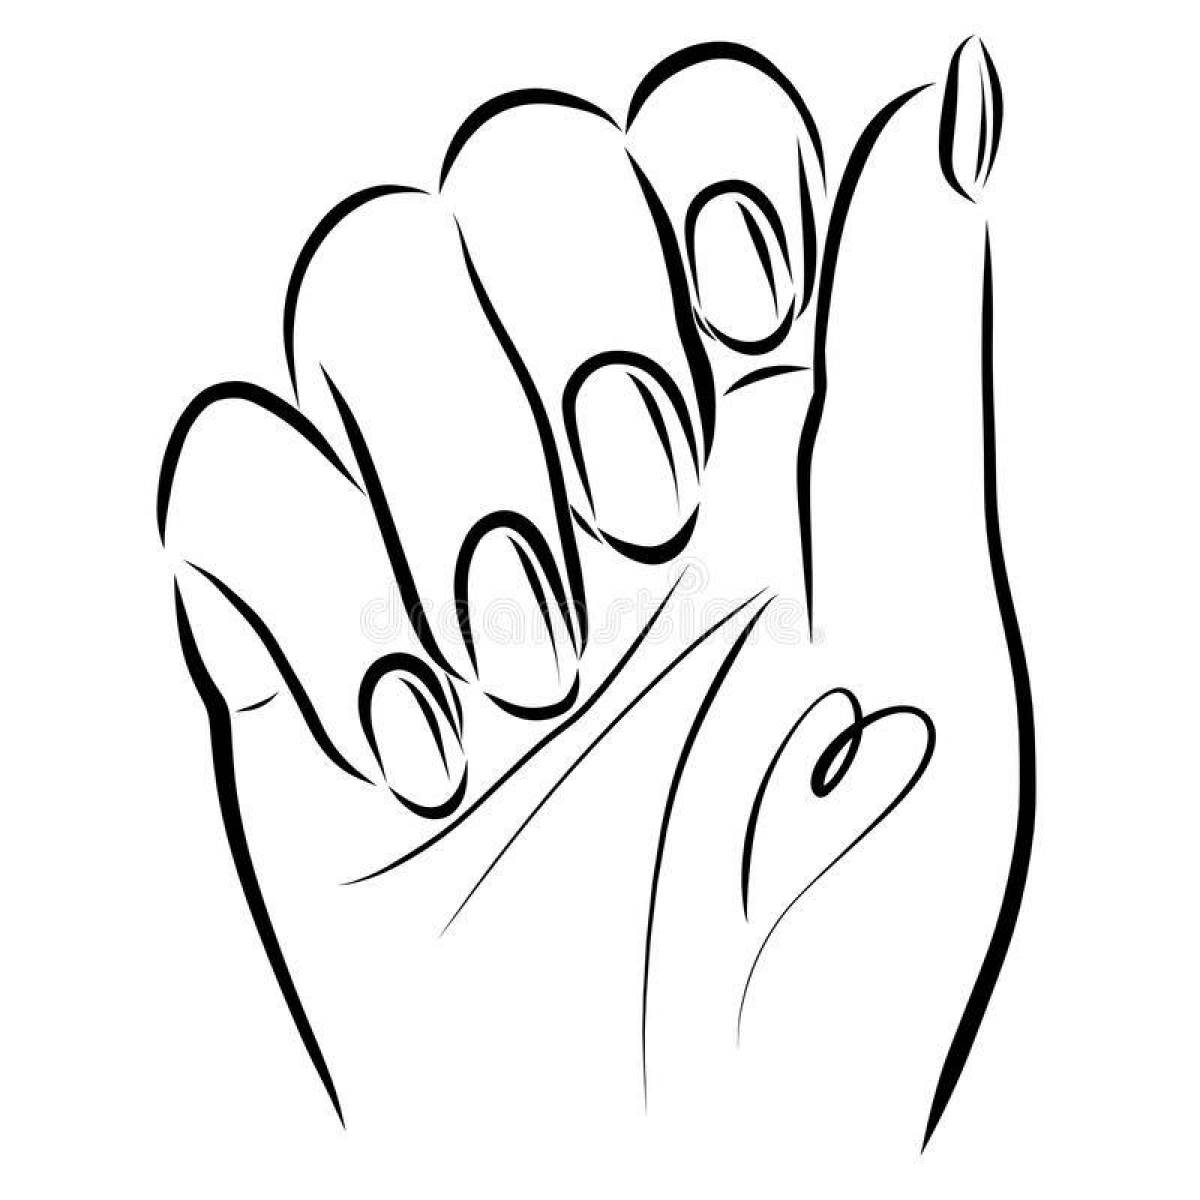 Раскраска манящая рука с ногтями